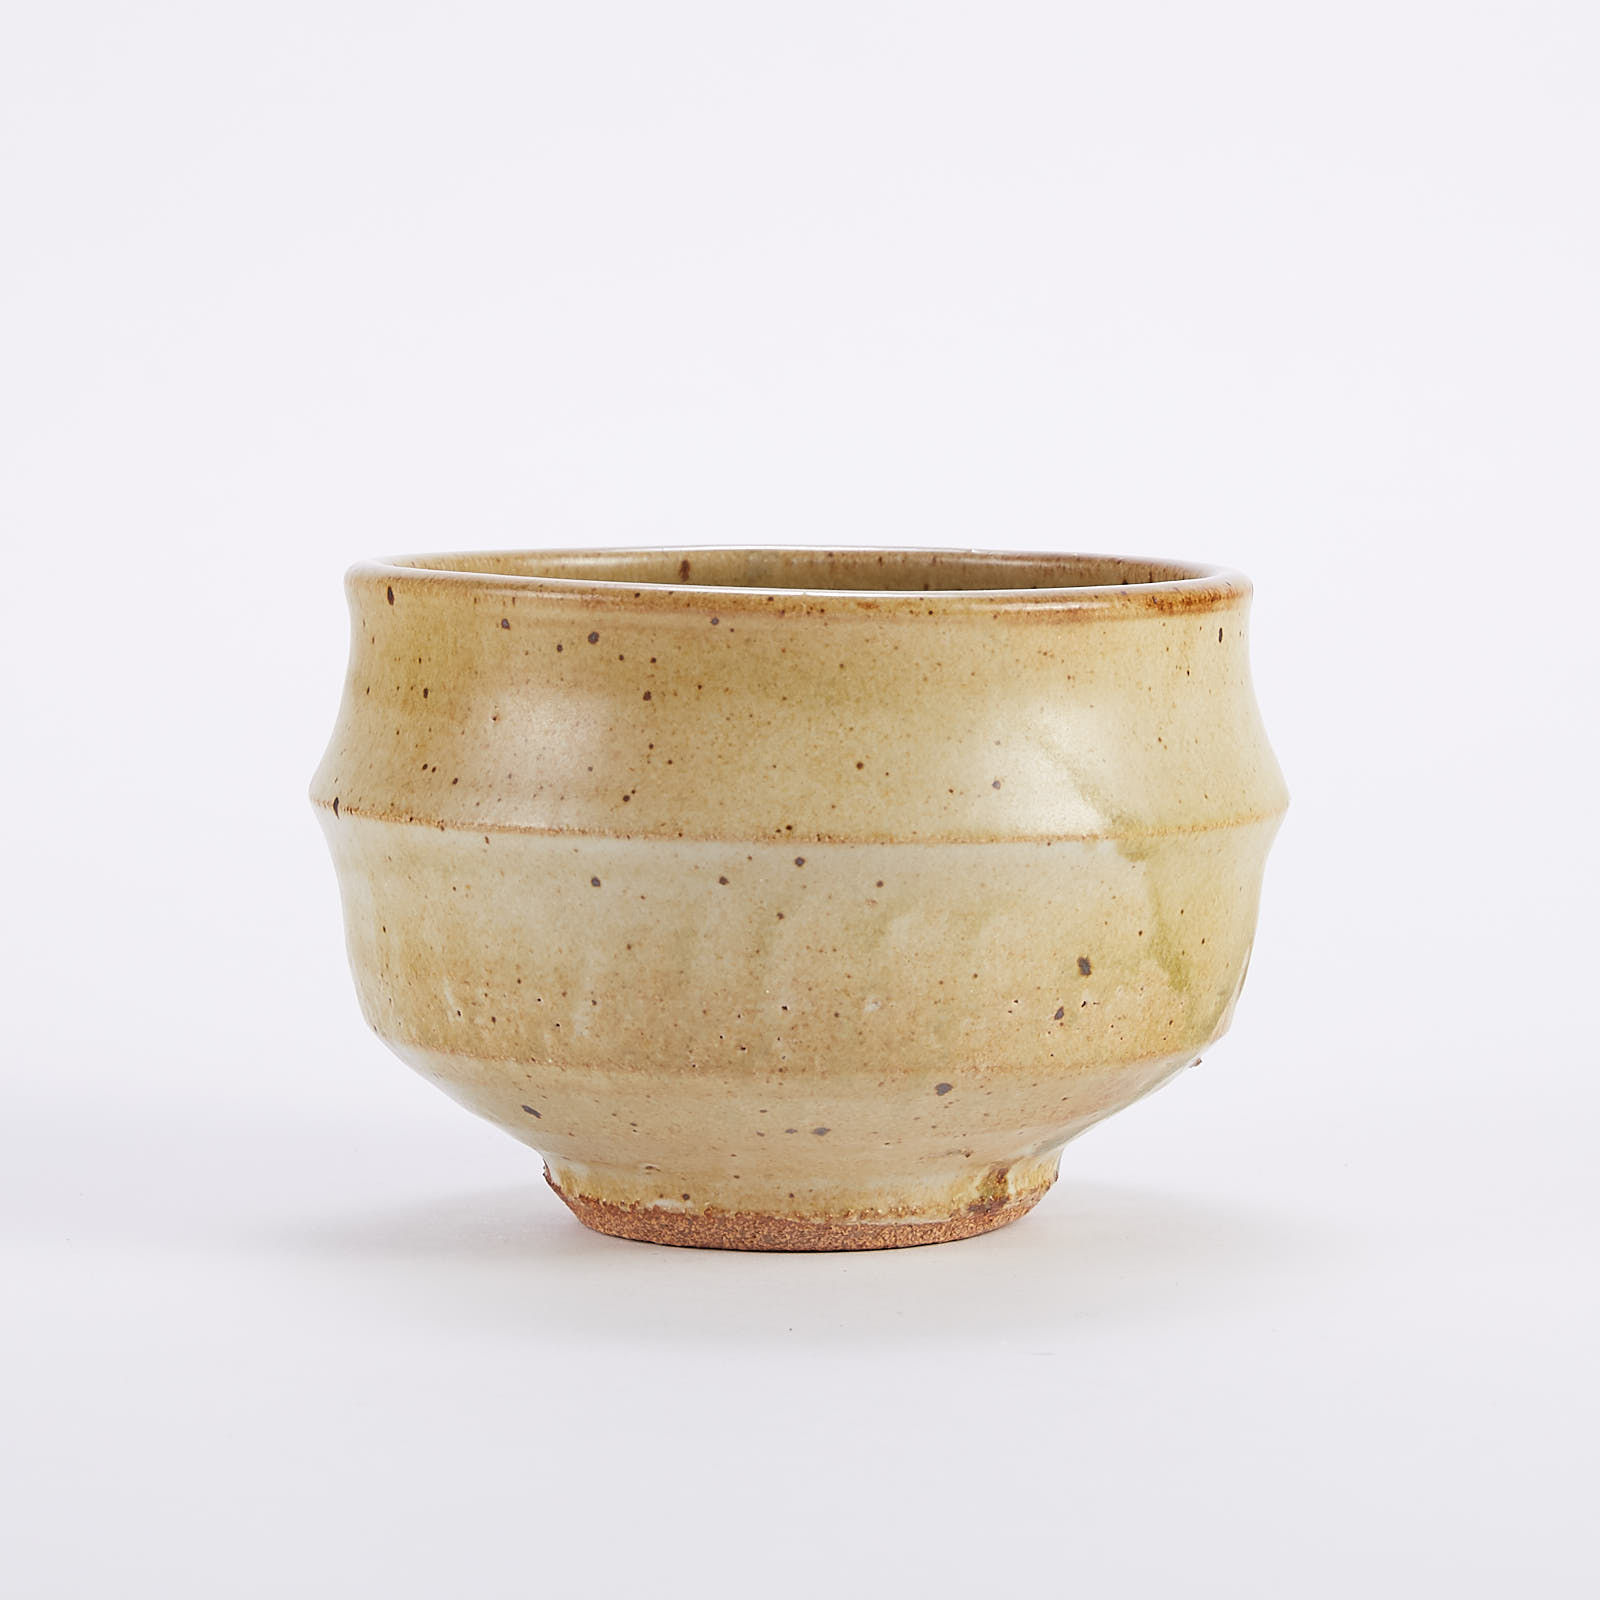 Lot 005: Warren MacKenzie Studio Pottery Bowl Gold and Green Glaze